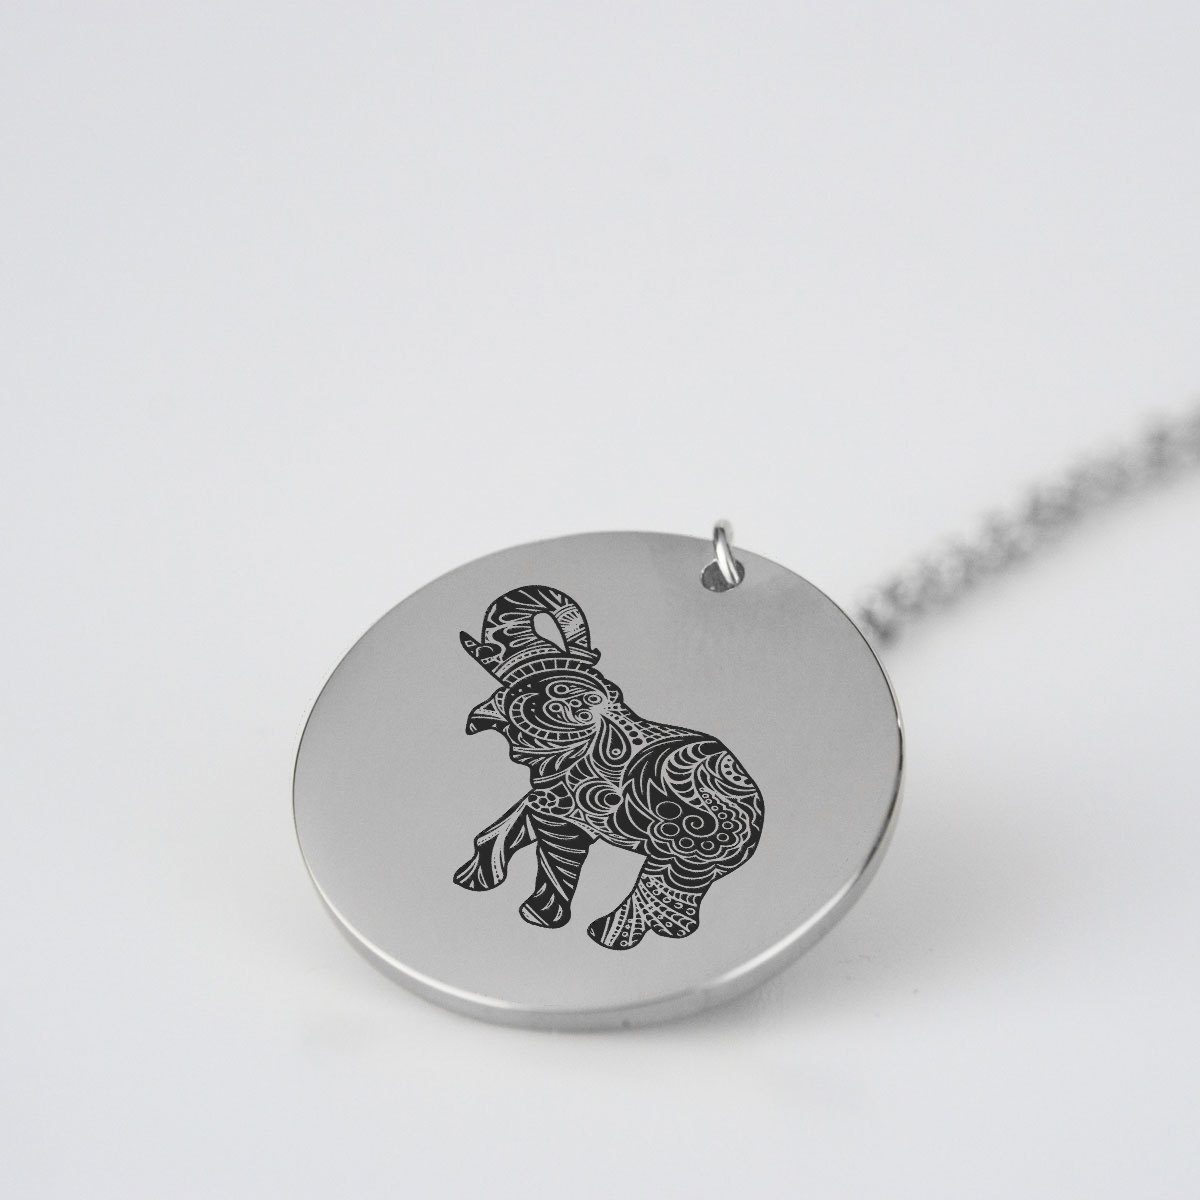 Elephant Silhouette Charm Necklace